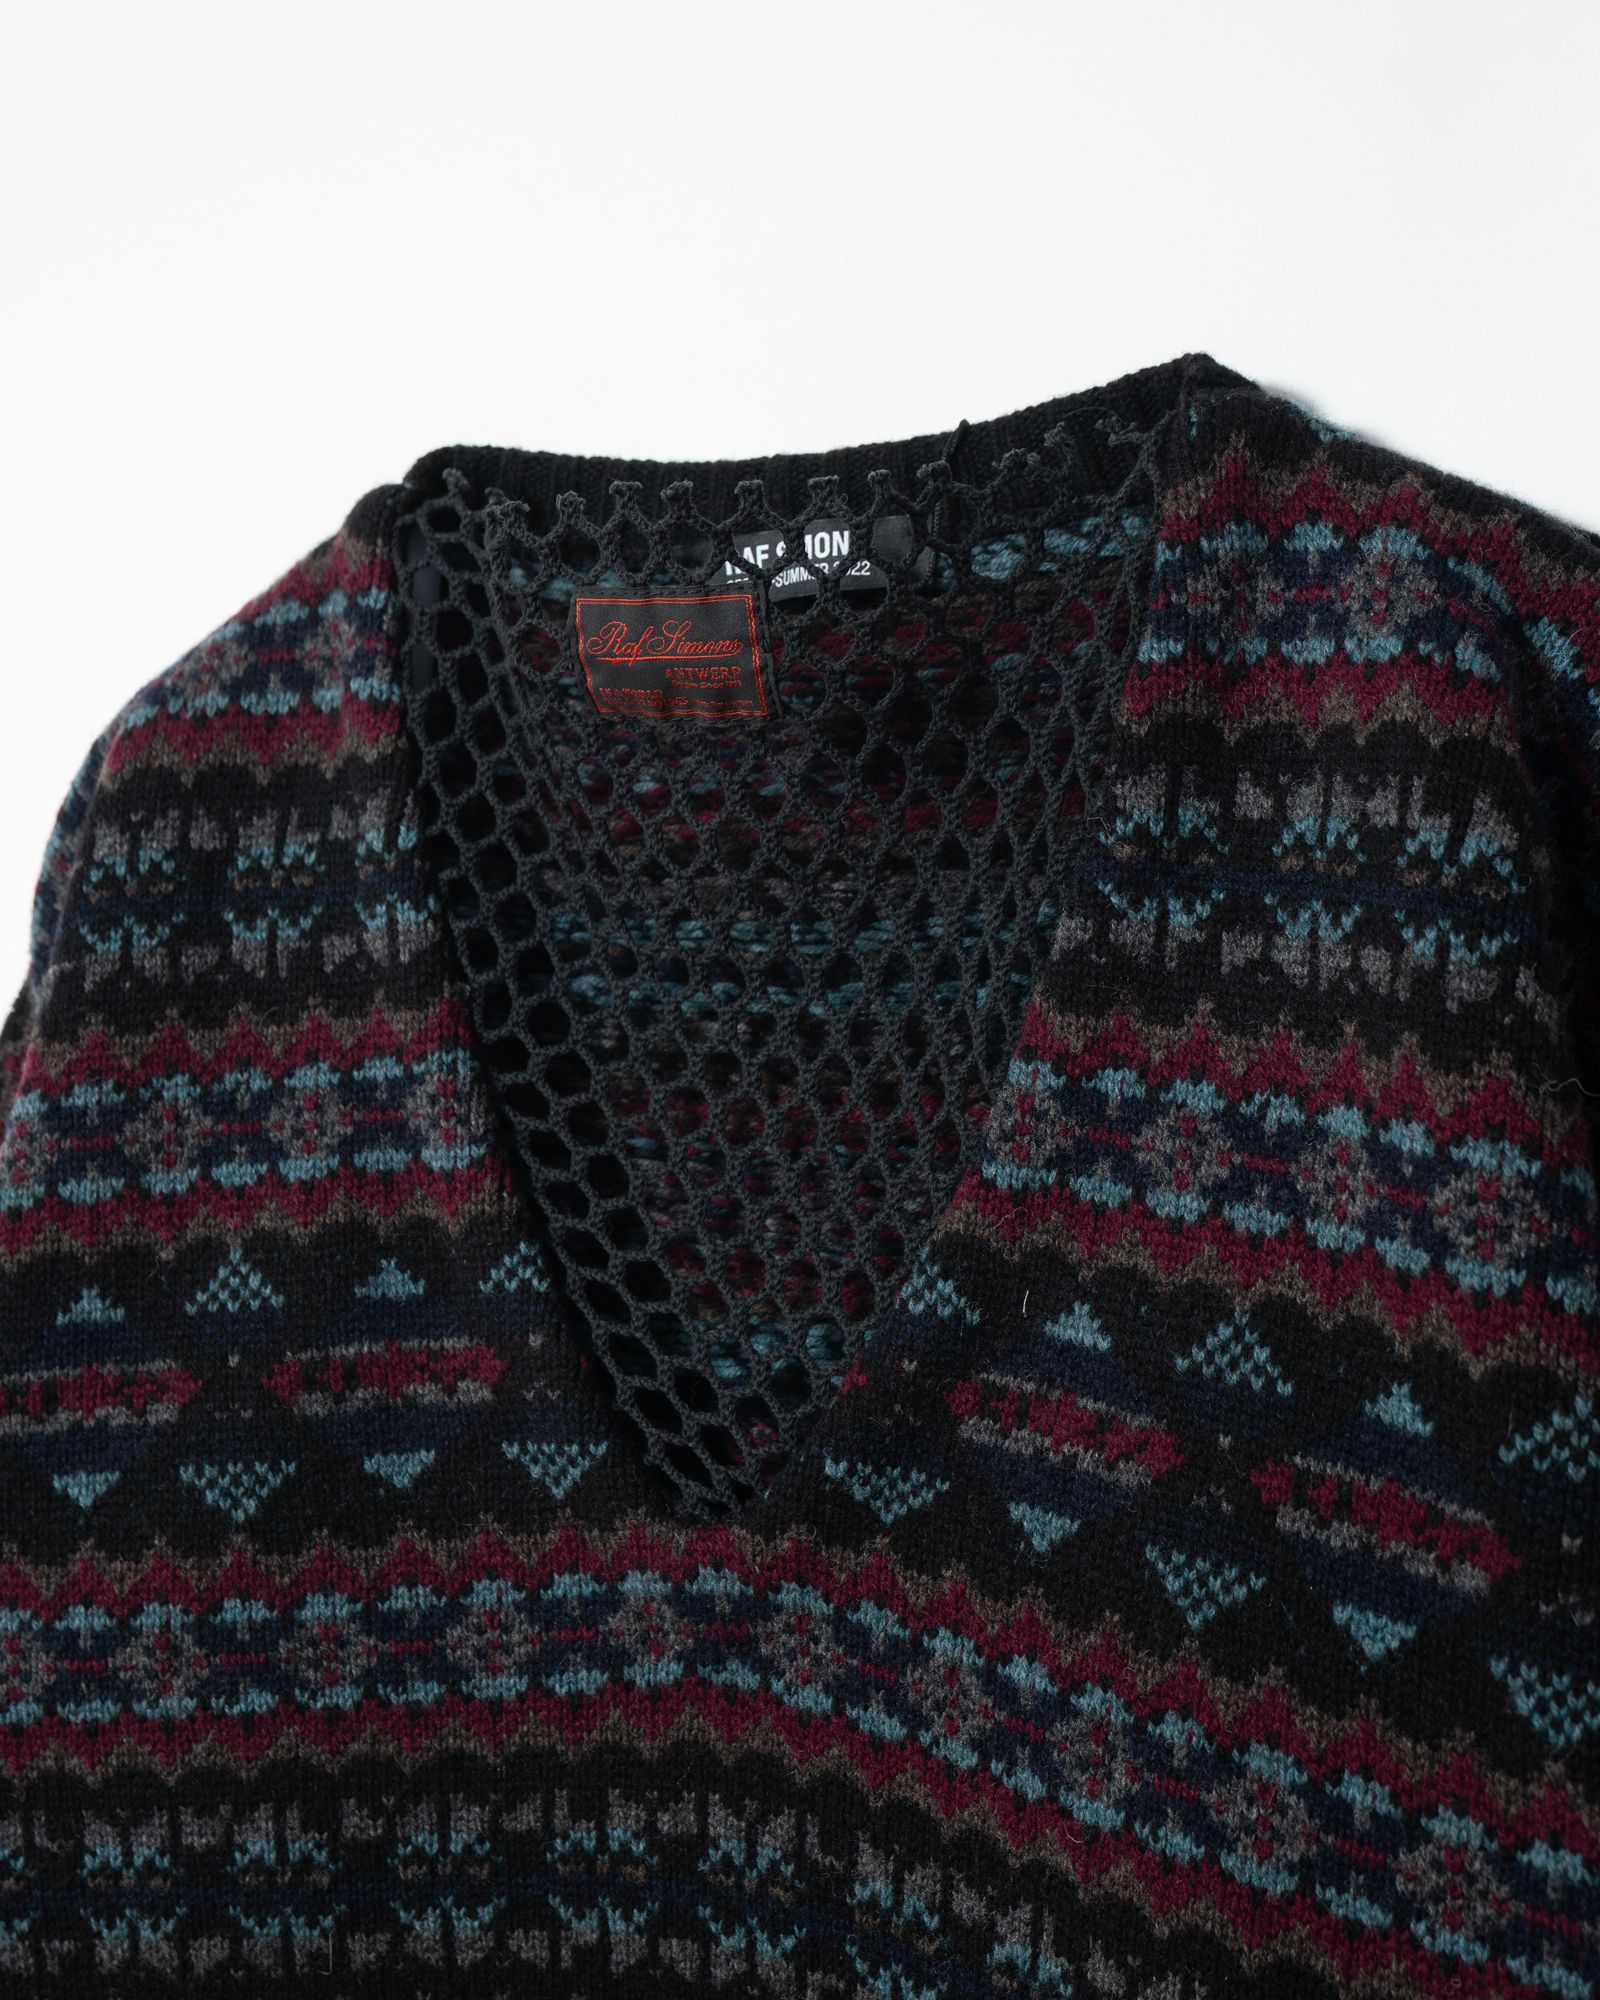 RAF SIMONS - Fair Isle jacquard V-neck sweater with net insert 